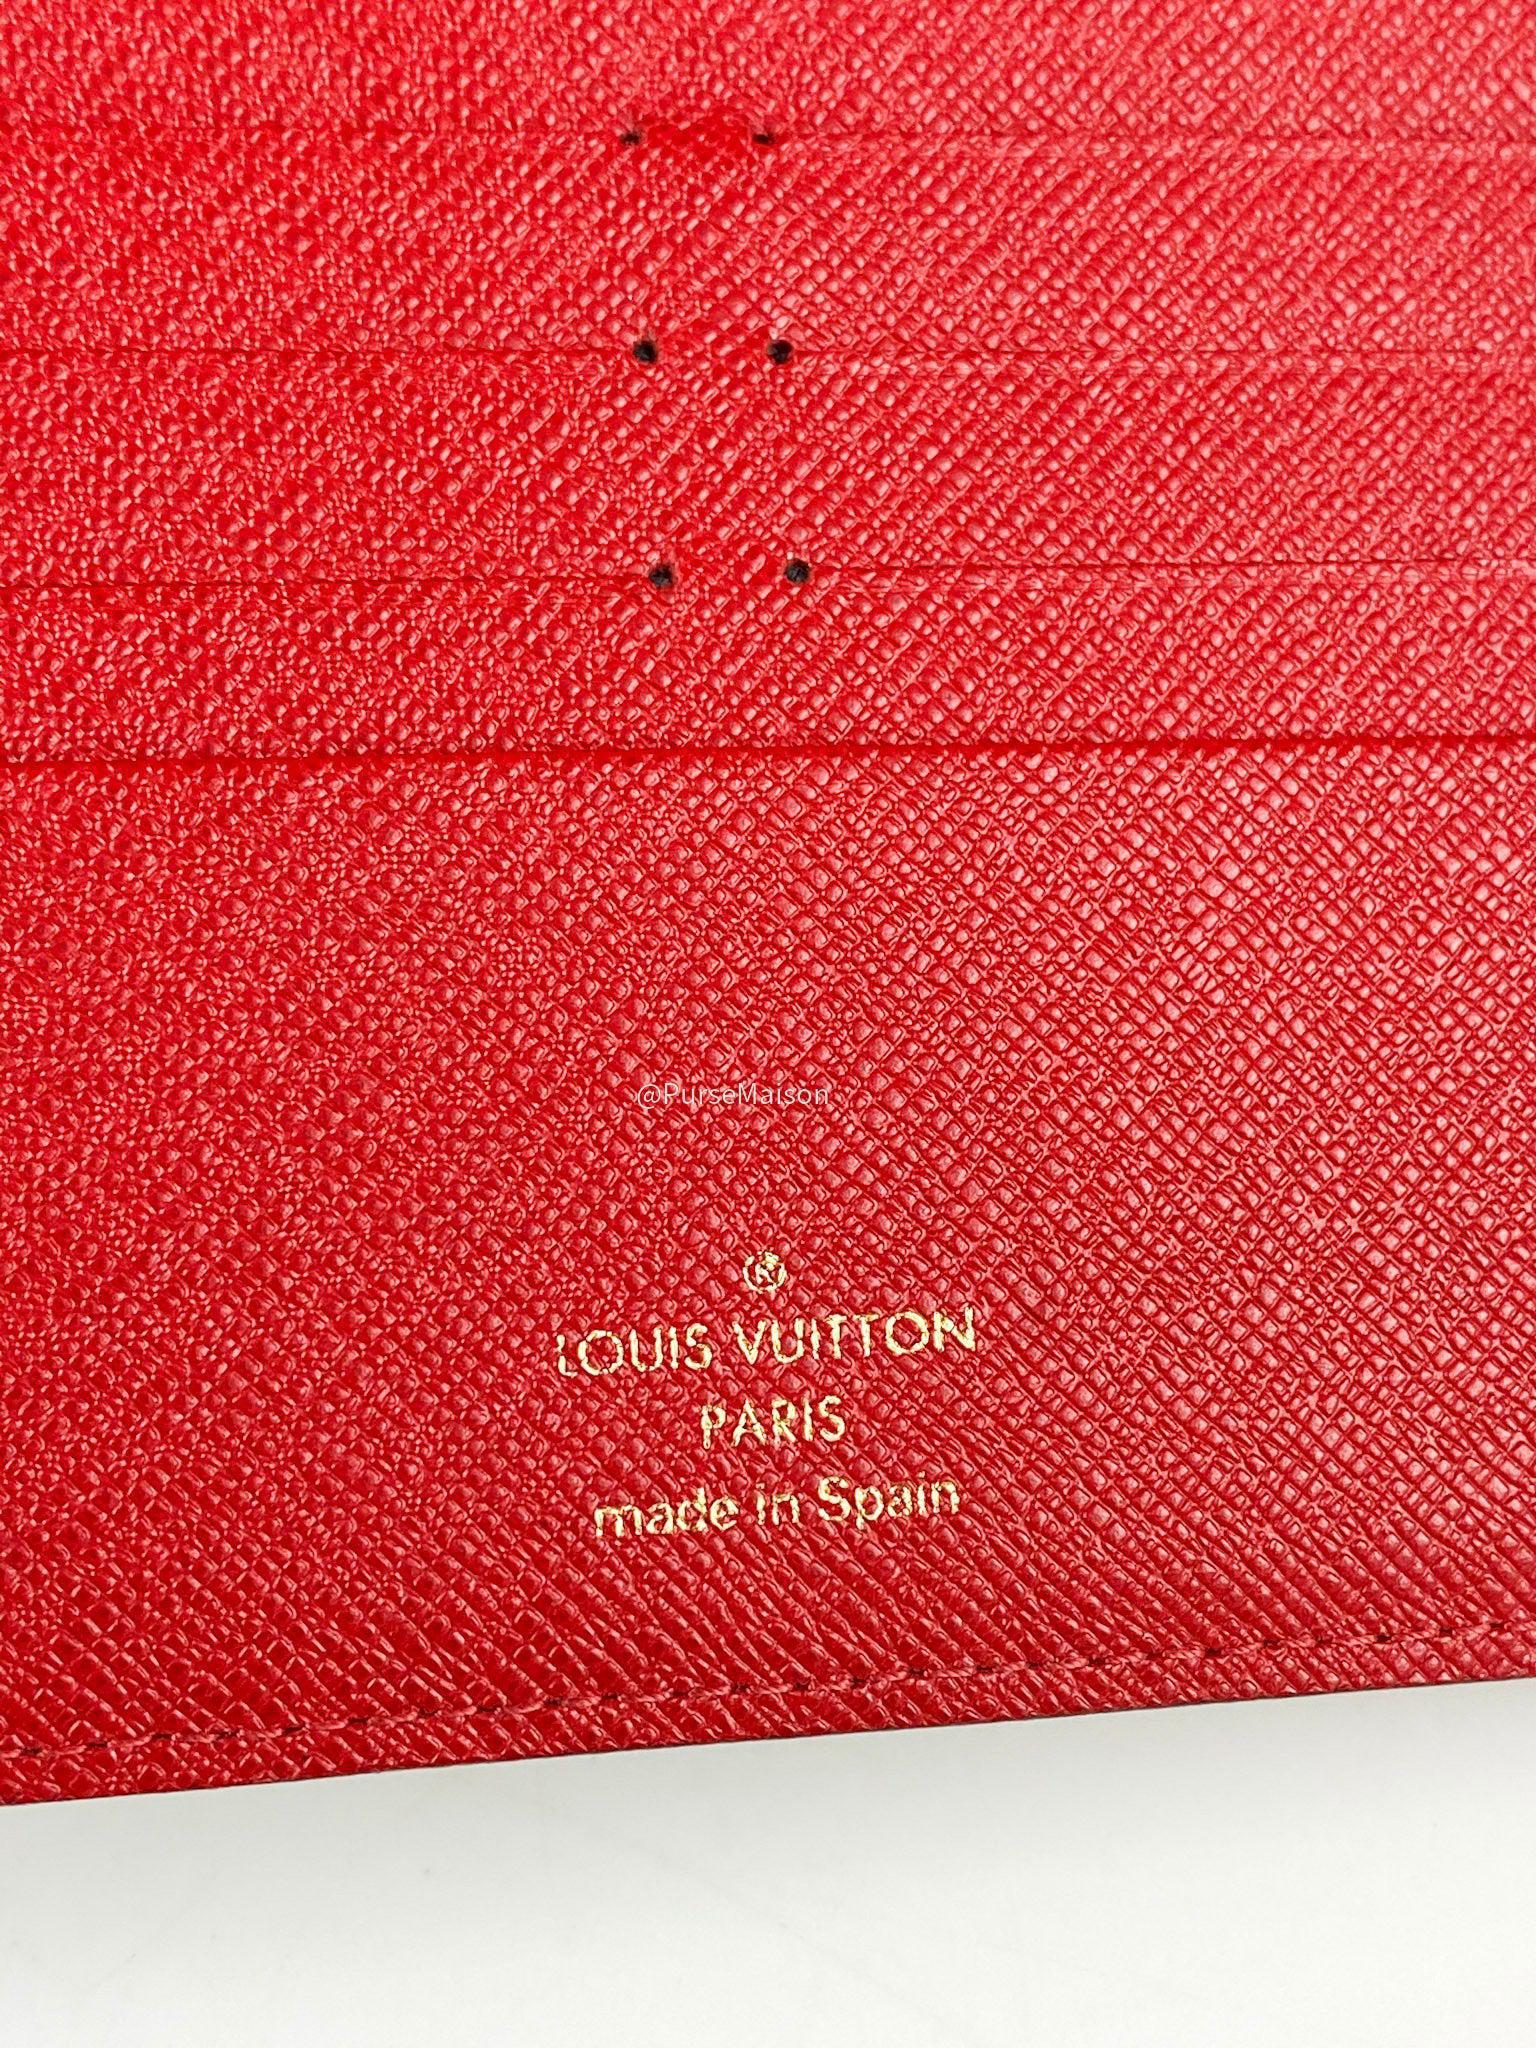 Authentic Louis Vuitton Multicolor Monogram Insolite Wallet Made in Spain  Date Code/Serial No. C…